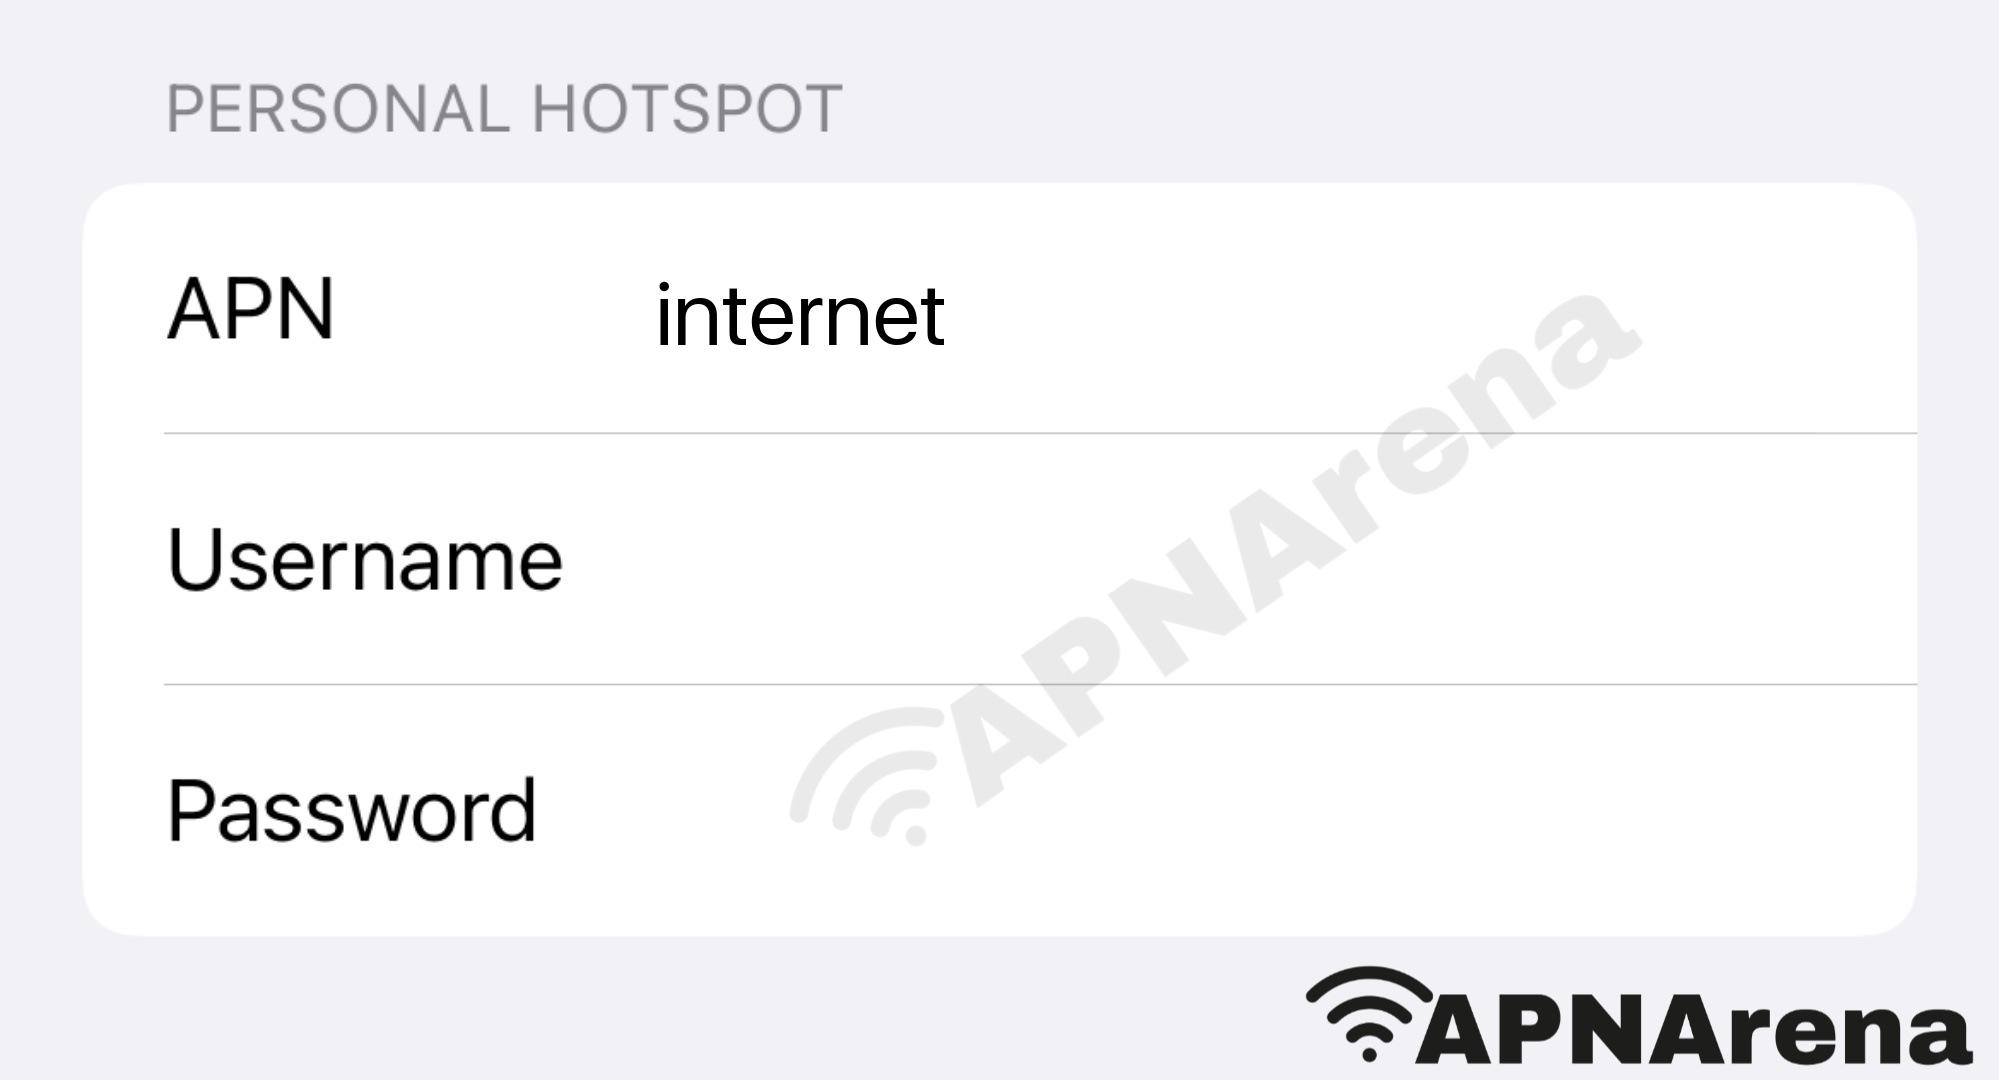 SK Telecom Personal Hotspot Settings for iPhone